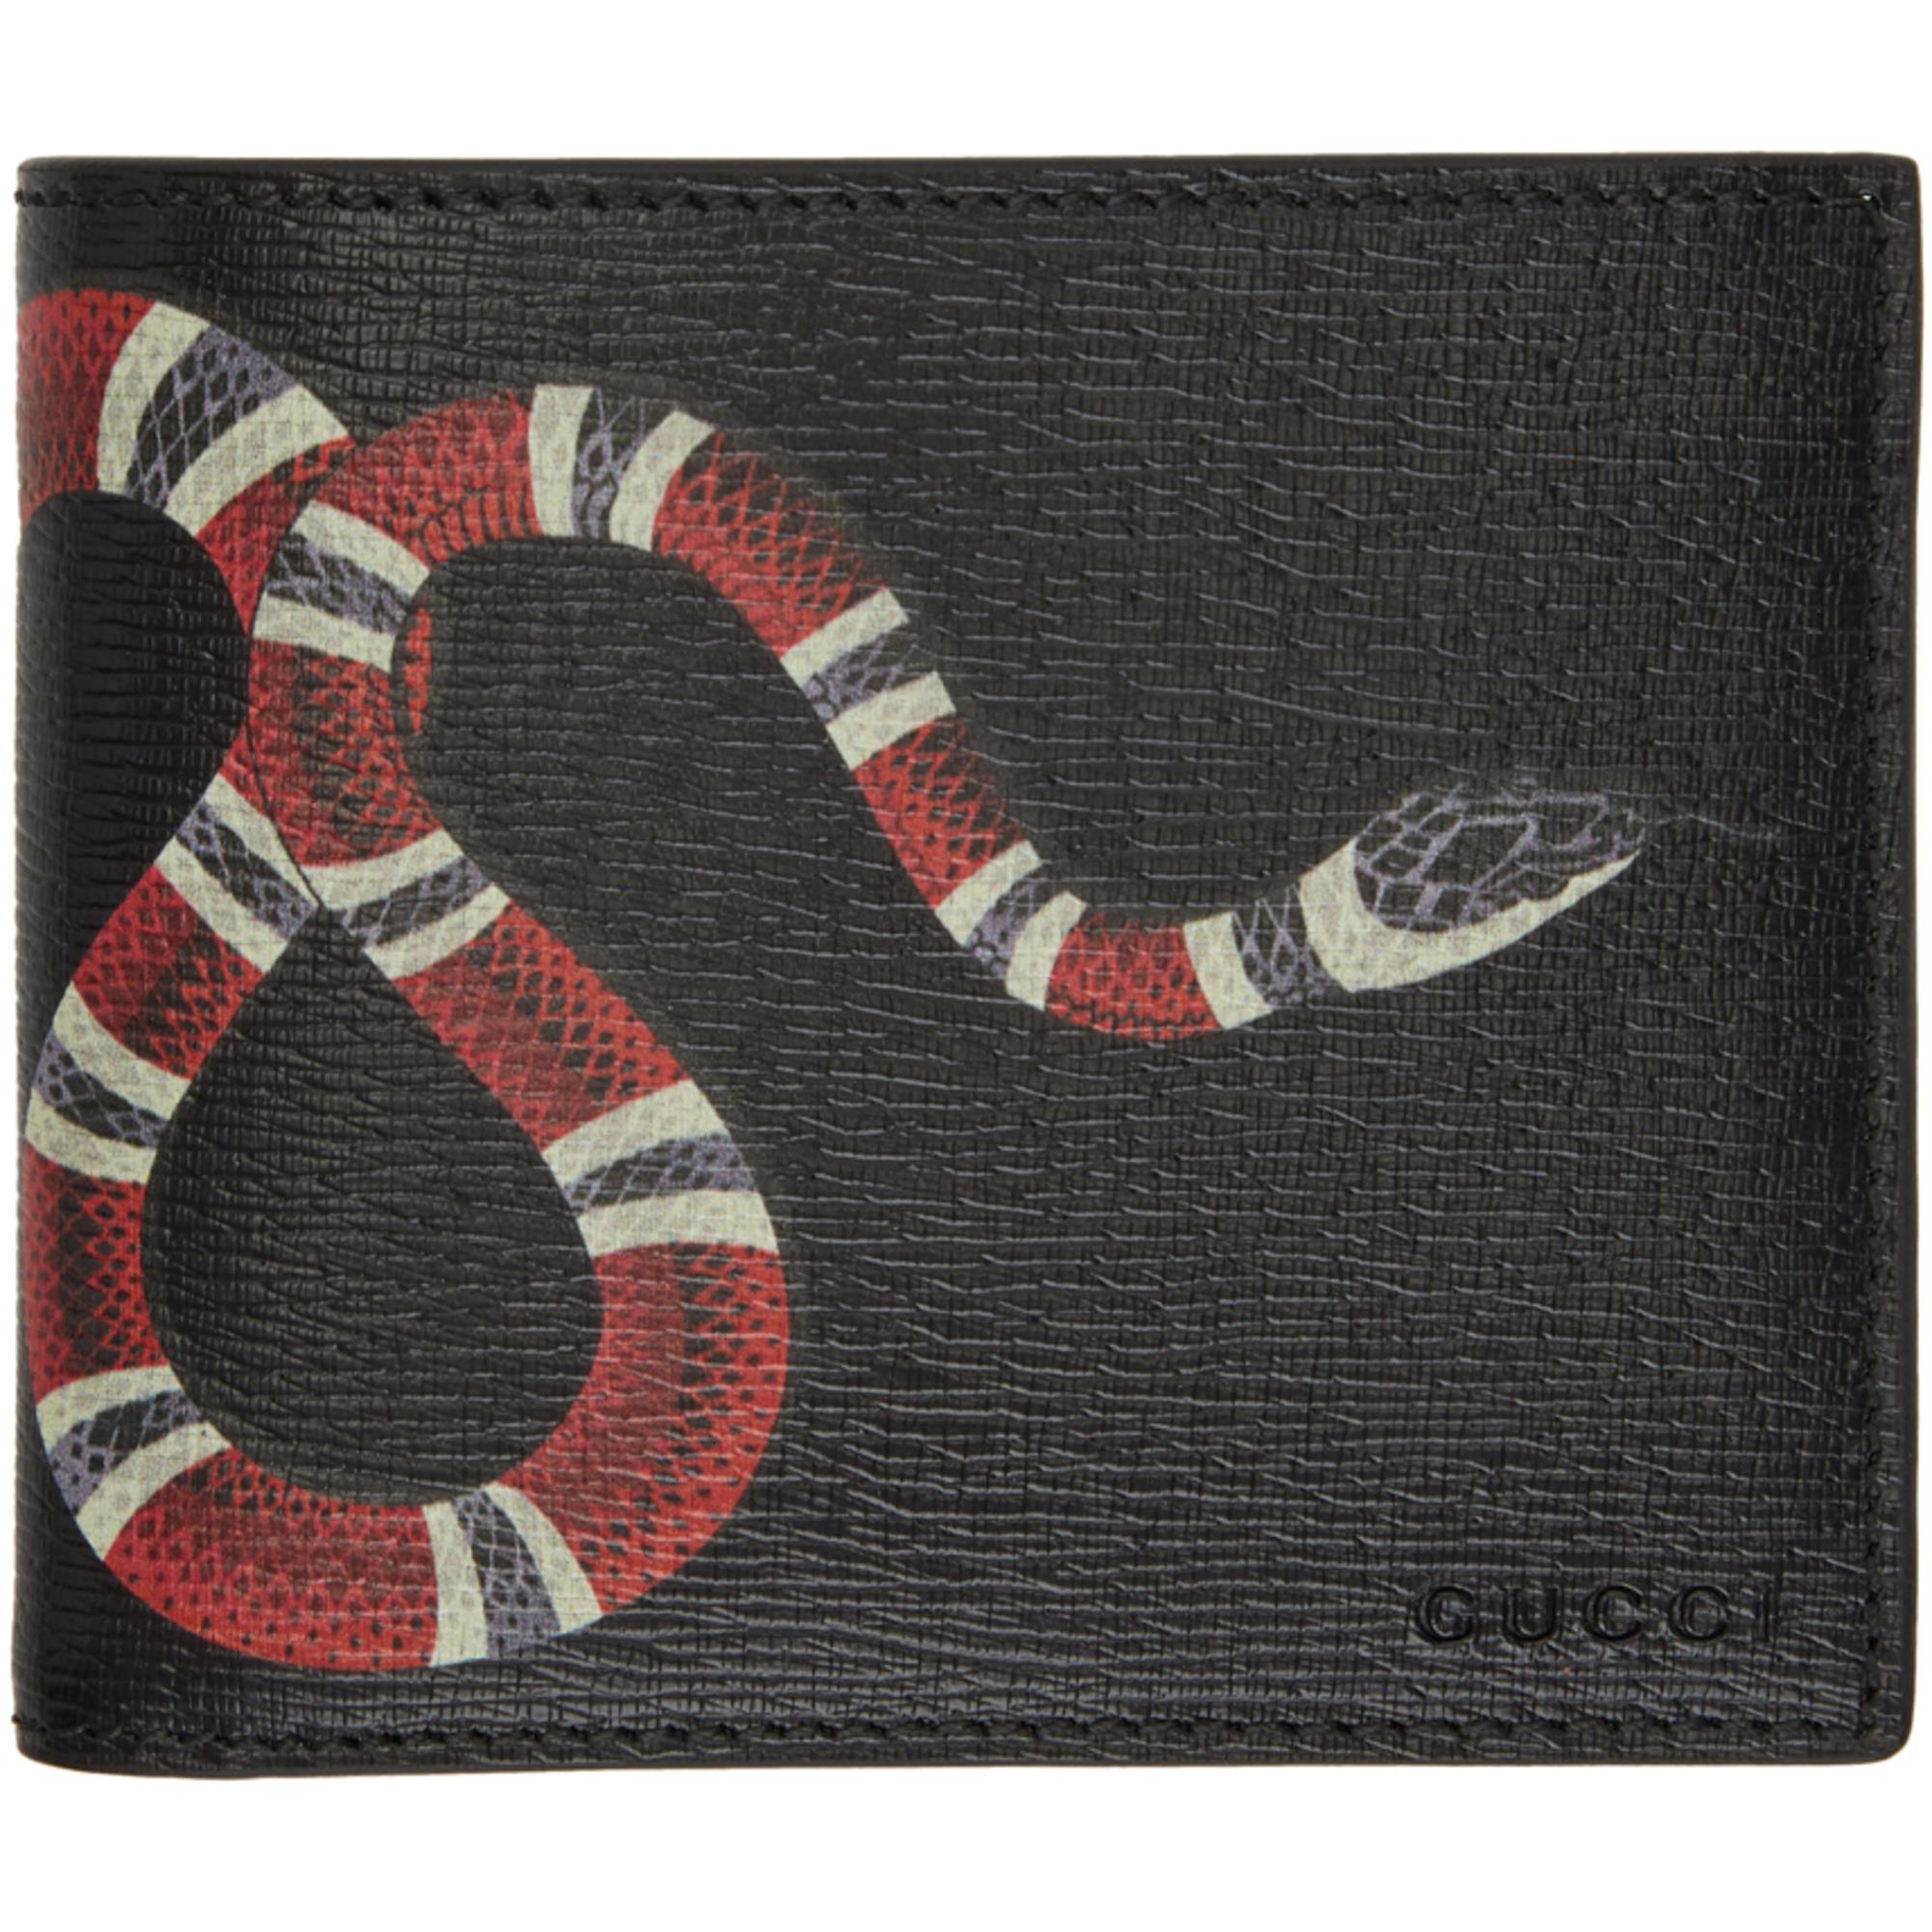 gucci snake wallet men